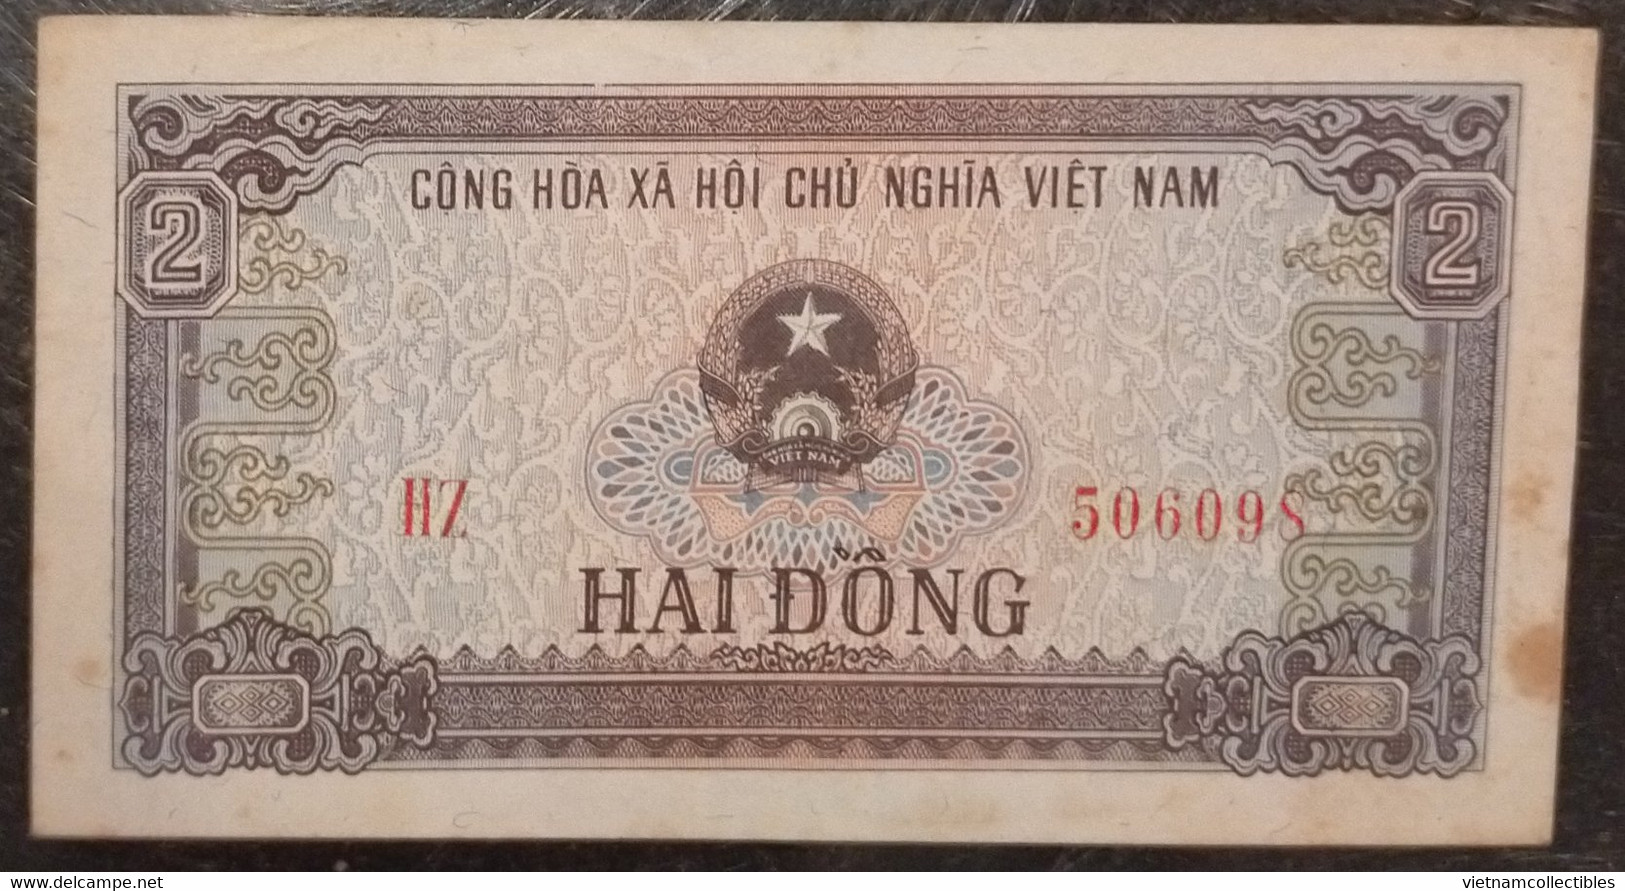 Viet Nam Vietnam 2 Dong AU-UNC Banknote Note 1980 - Pick # 85a / 02 Photo - Vietnam